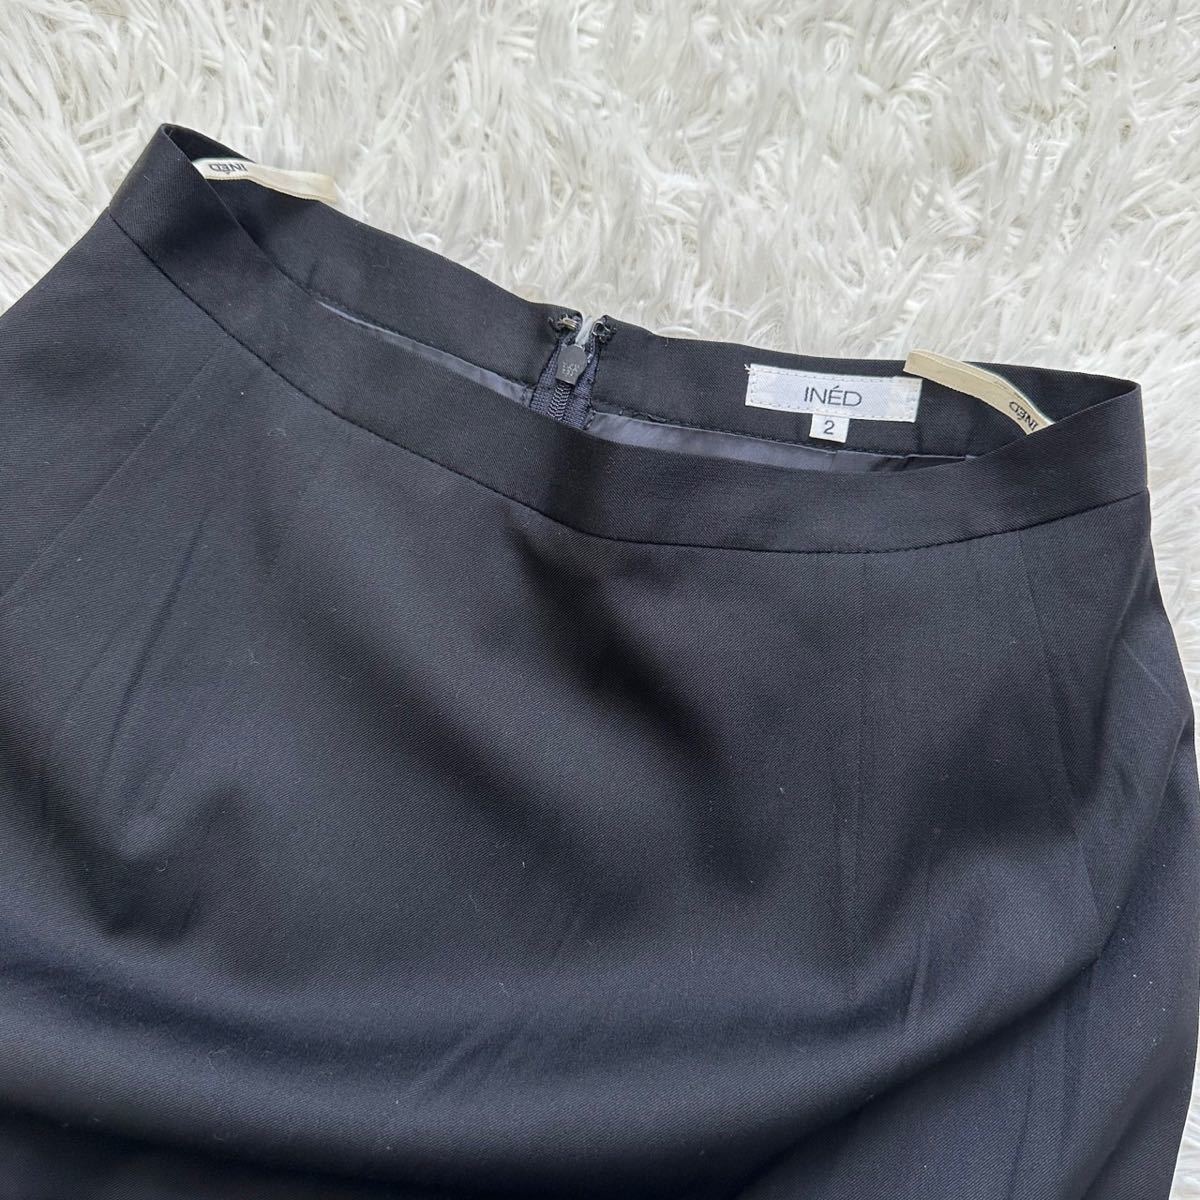  чёрный INED узкая юбка размер 2